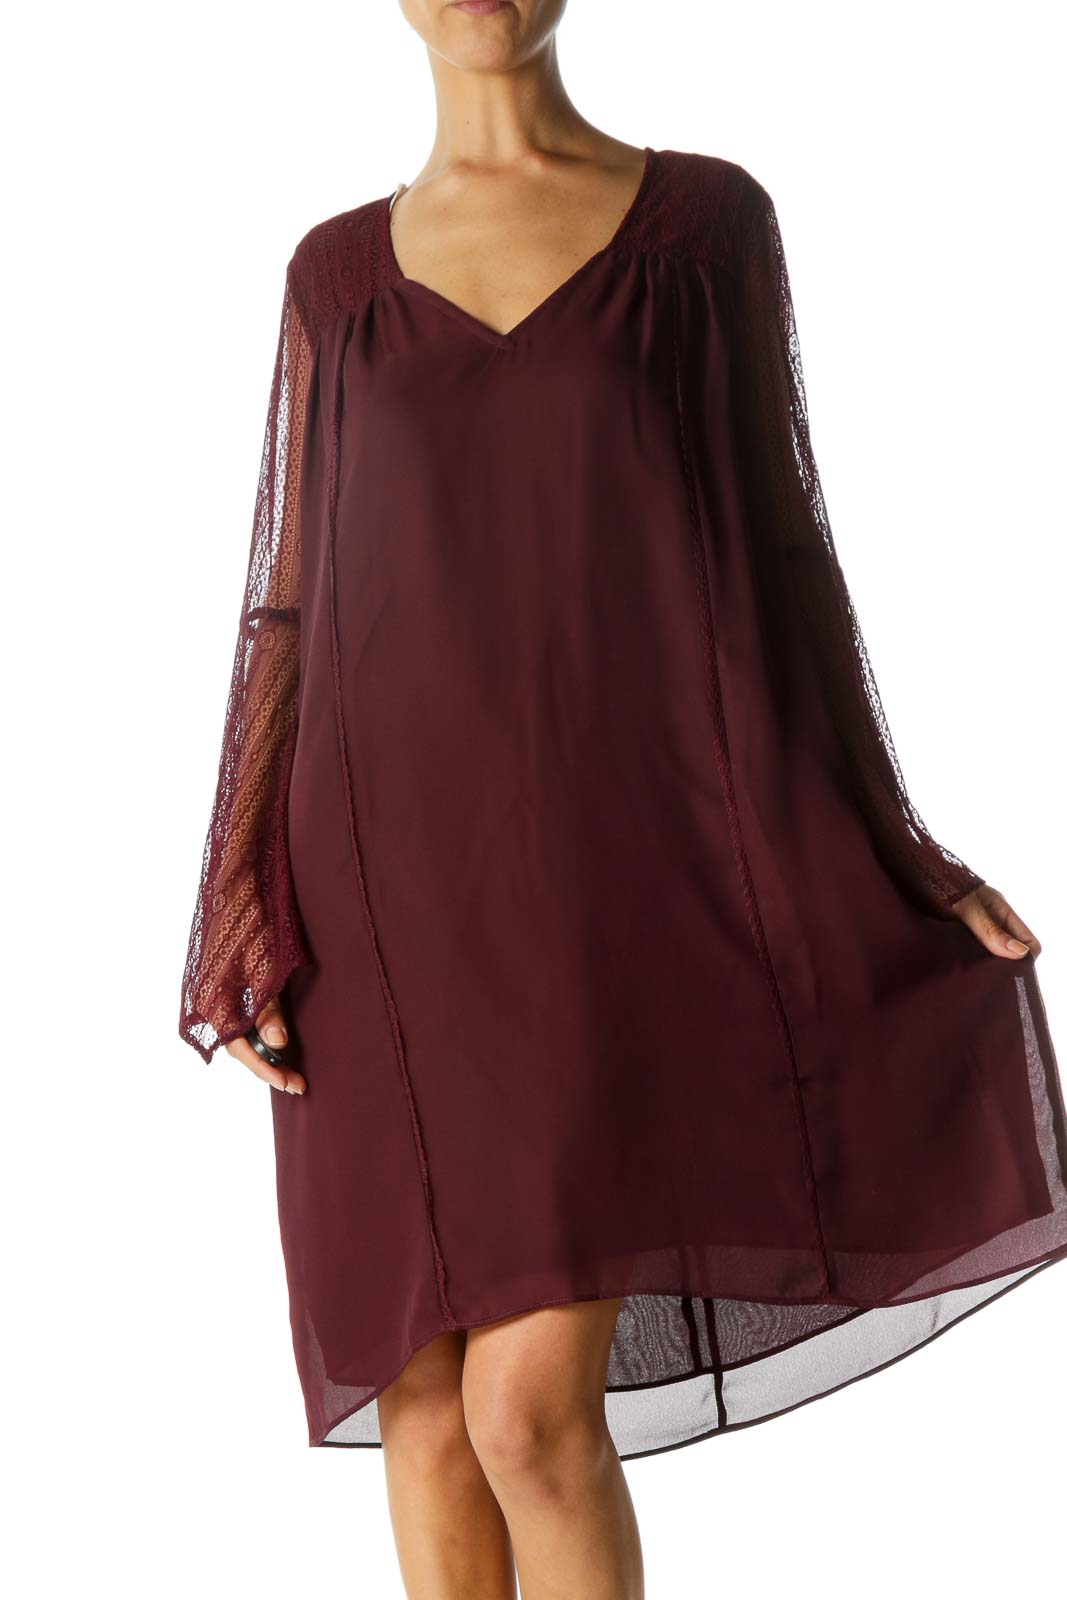 Burgundy V-Neck Stretch Lace Detail Long Sleeve Dress Front